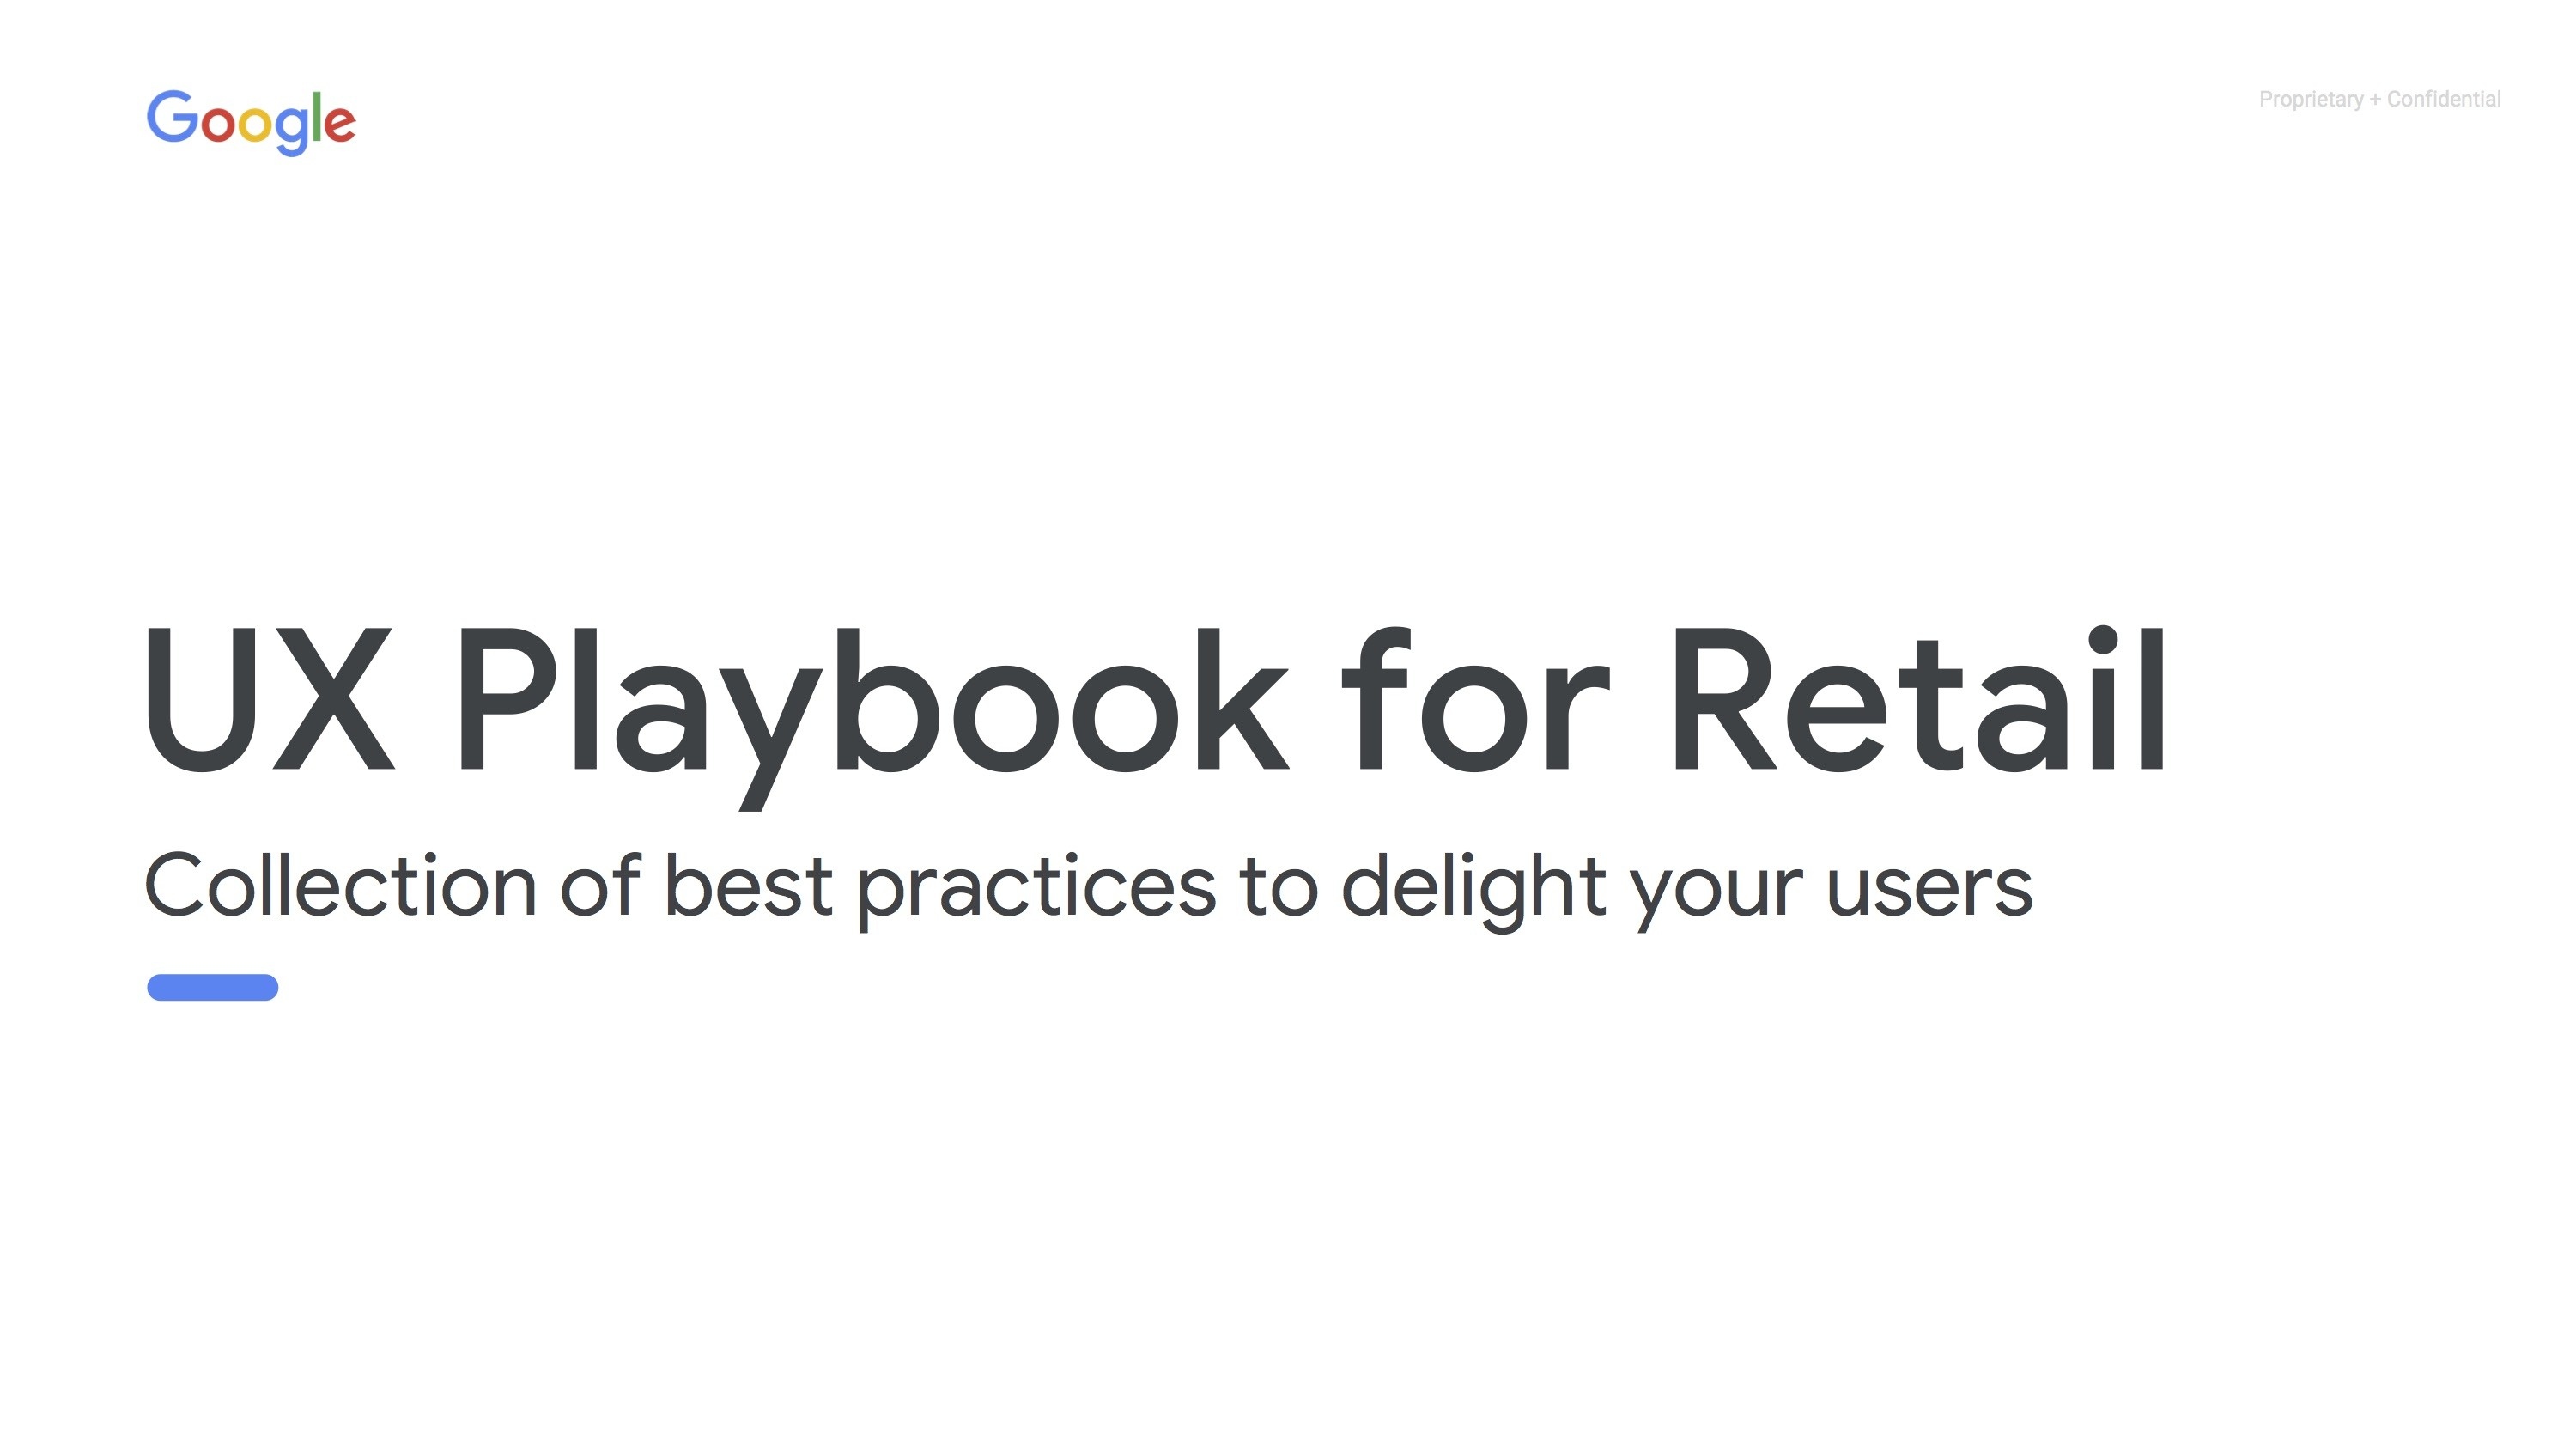 Google UX playbook for retail cover封面-鯊客科技網站SEO優化公司